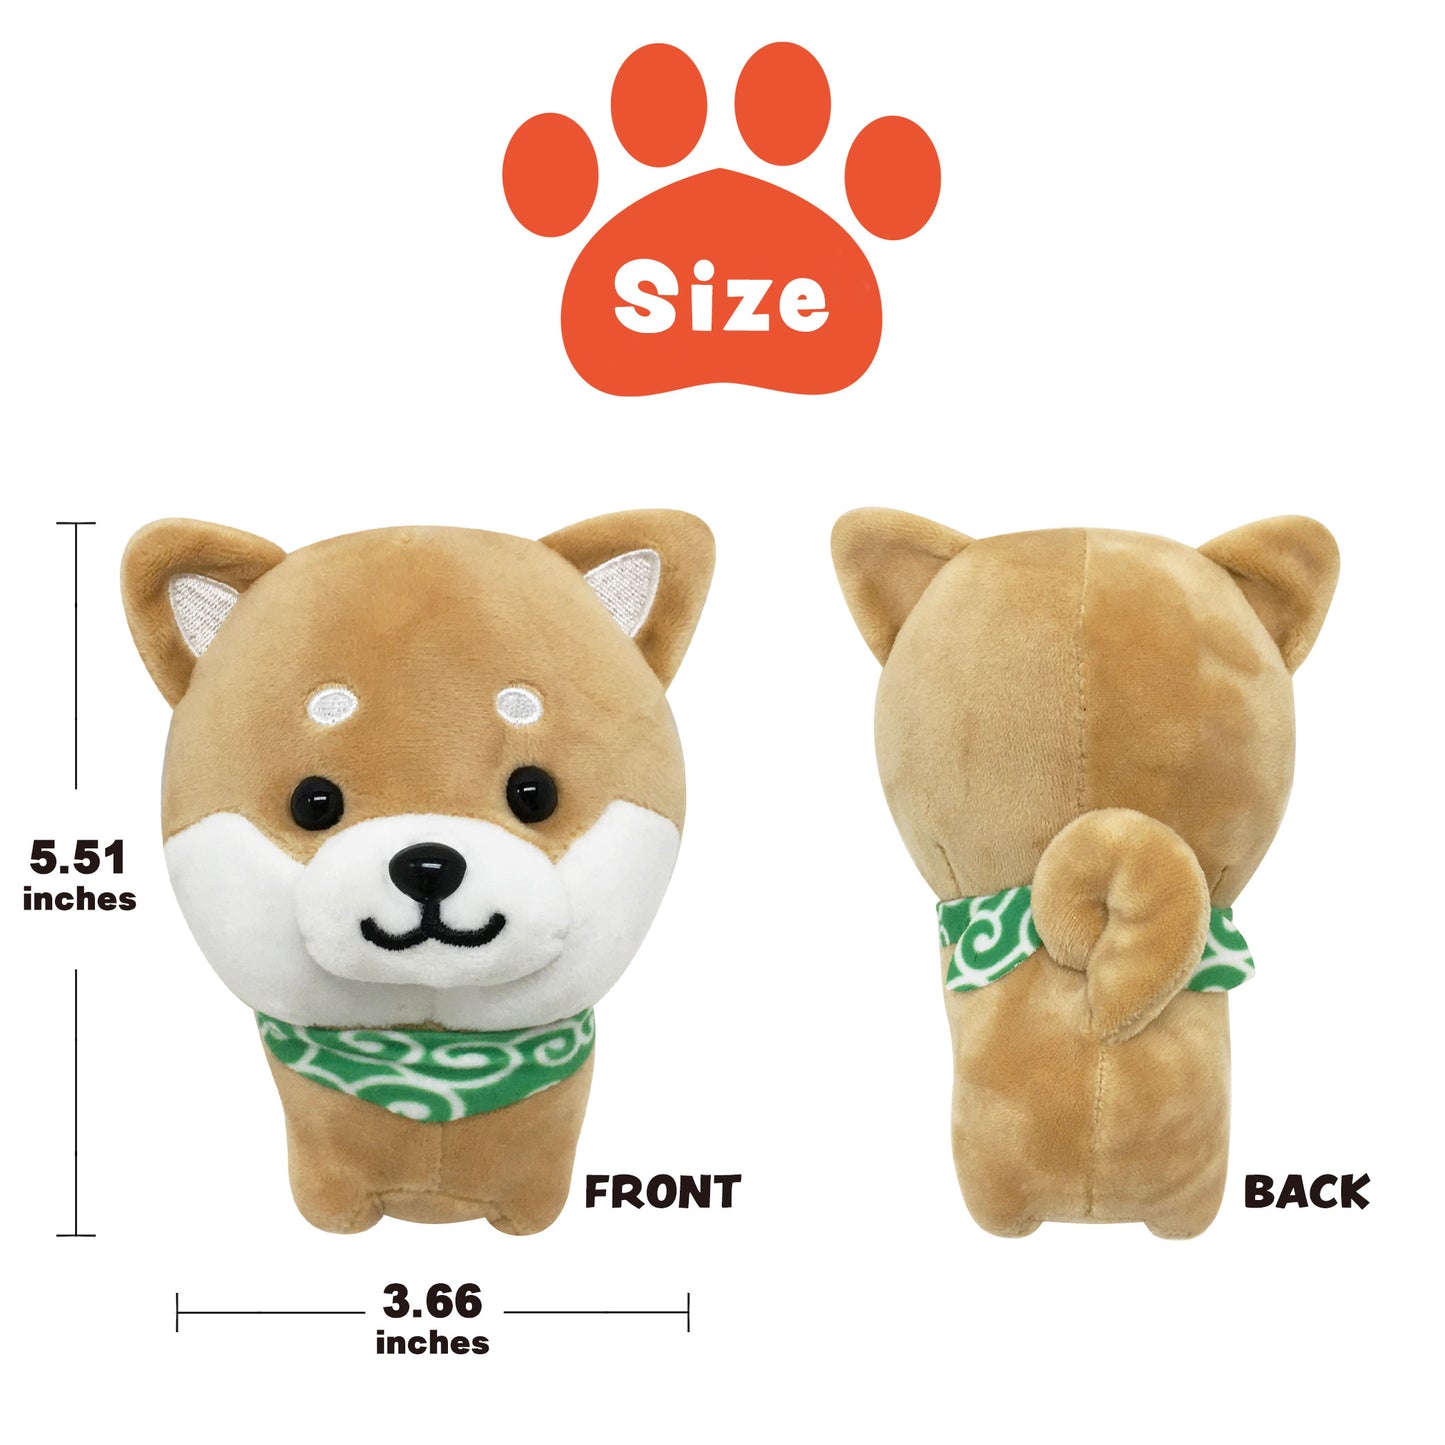 Size of stuffed dog Mameshiba brown